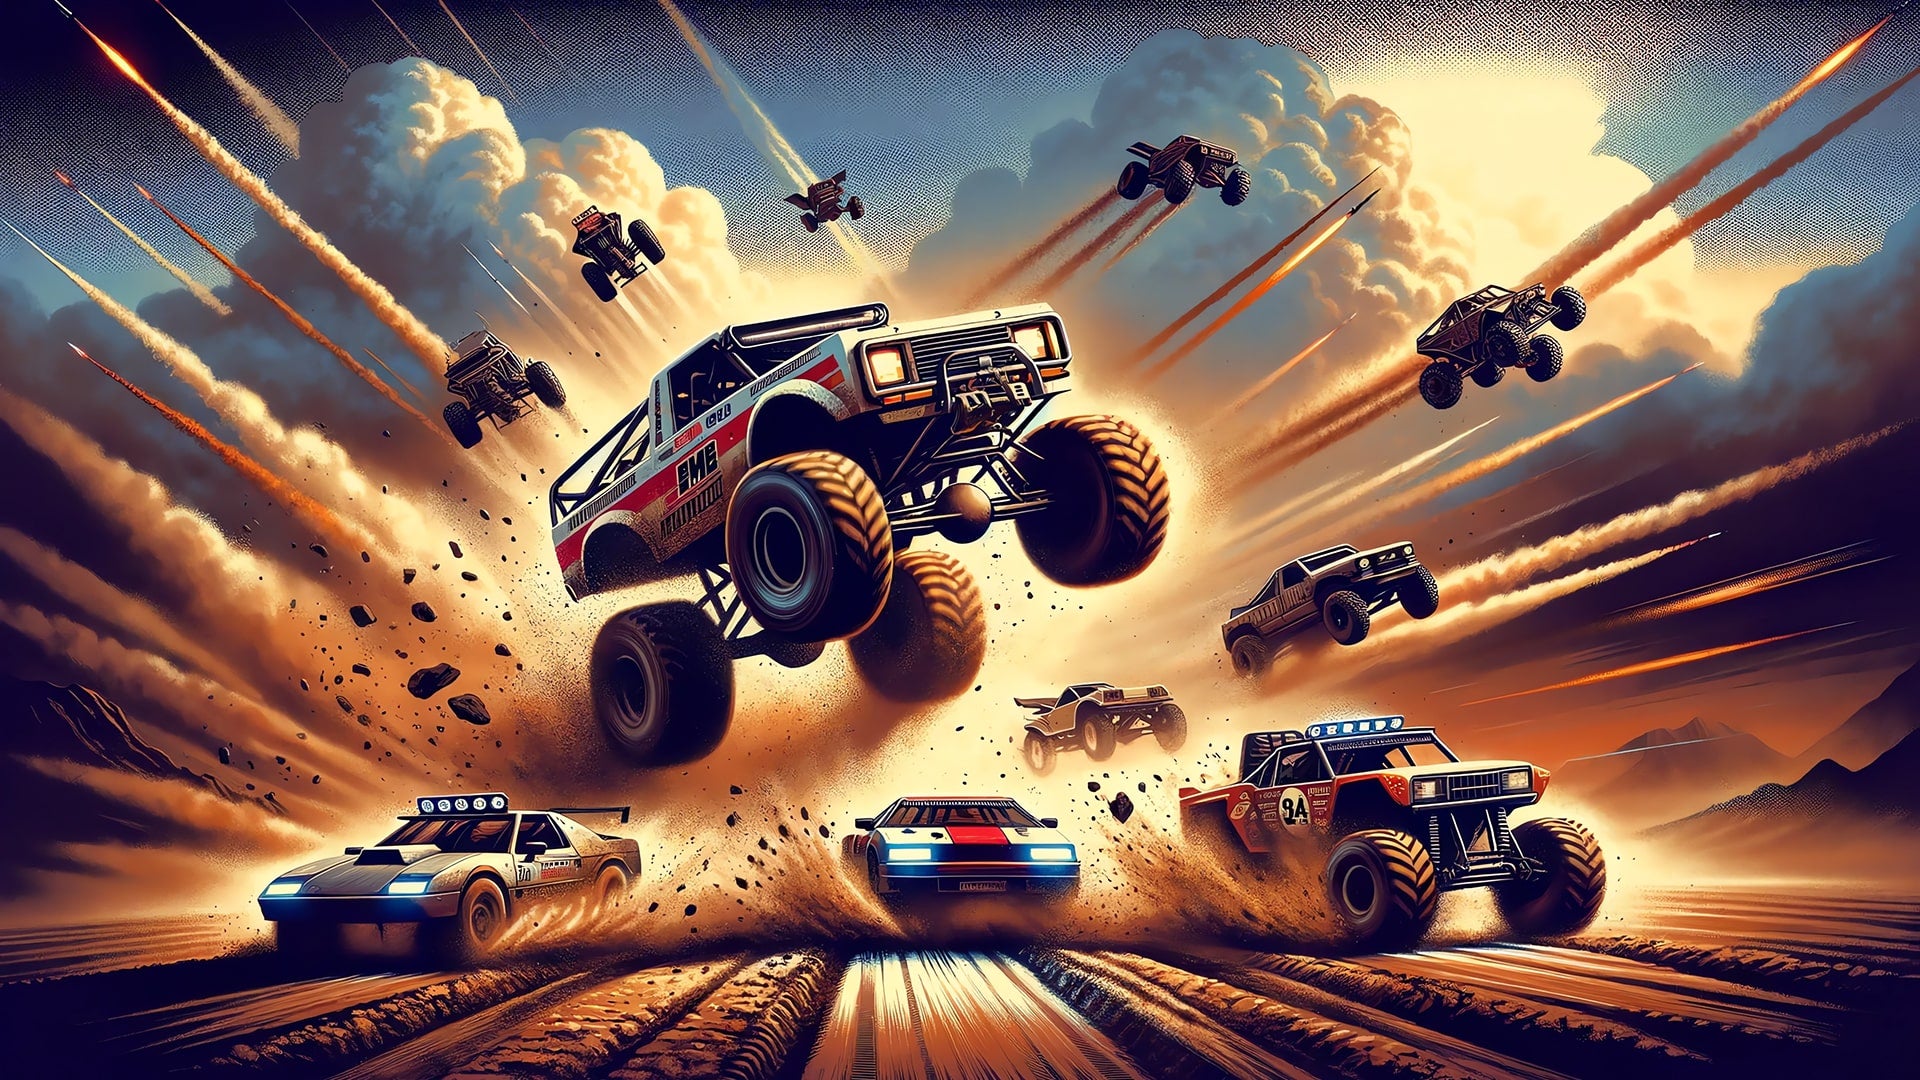 RPM Racing | Super Nintendo | Gameplay